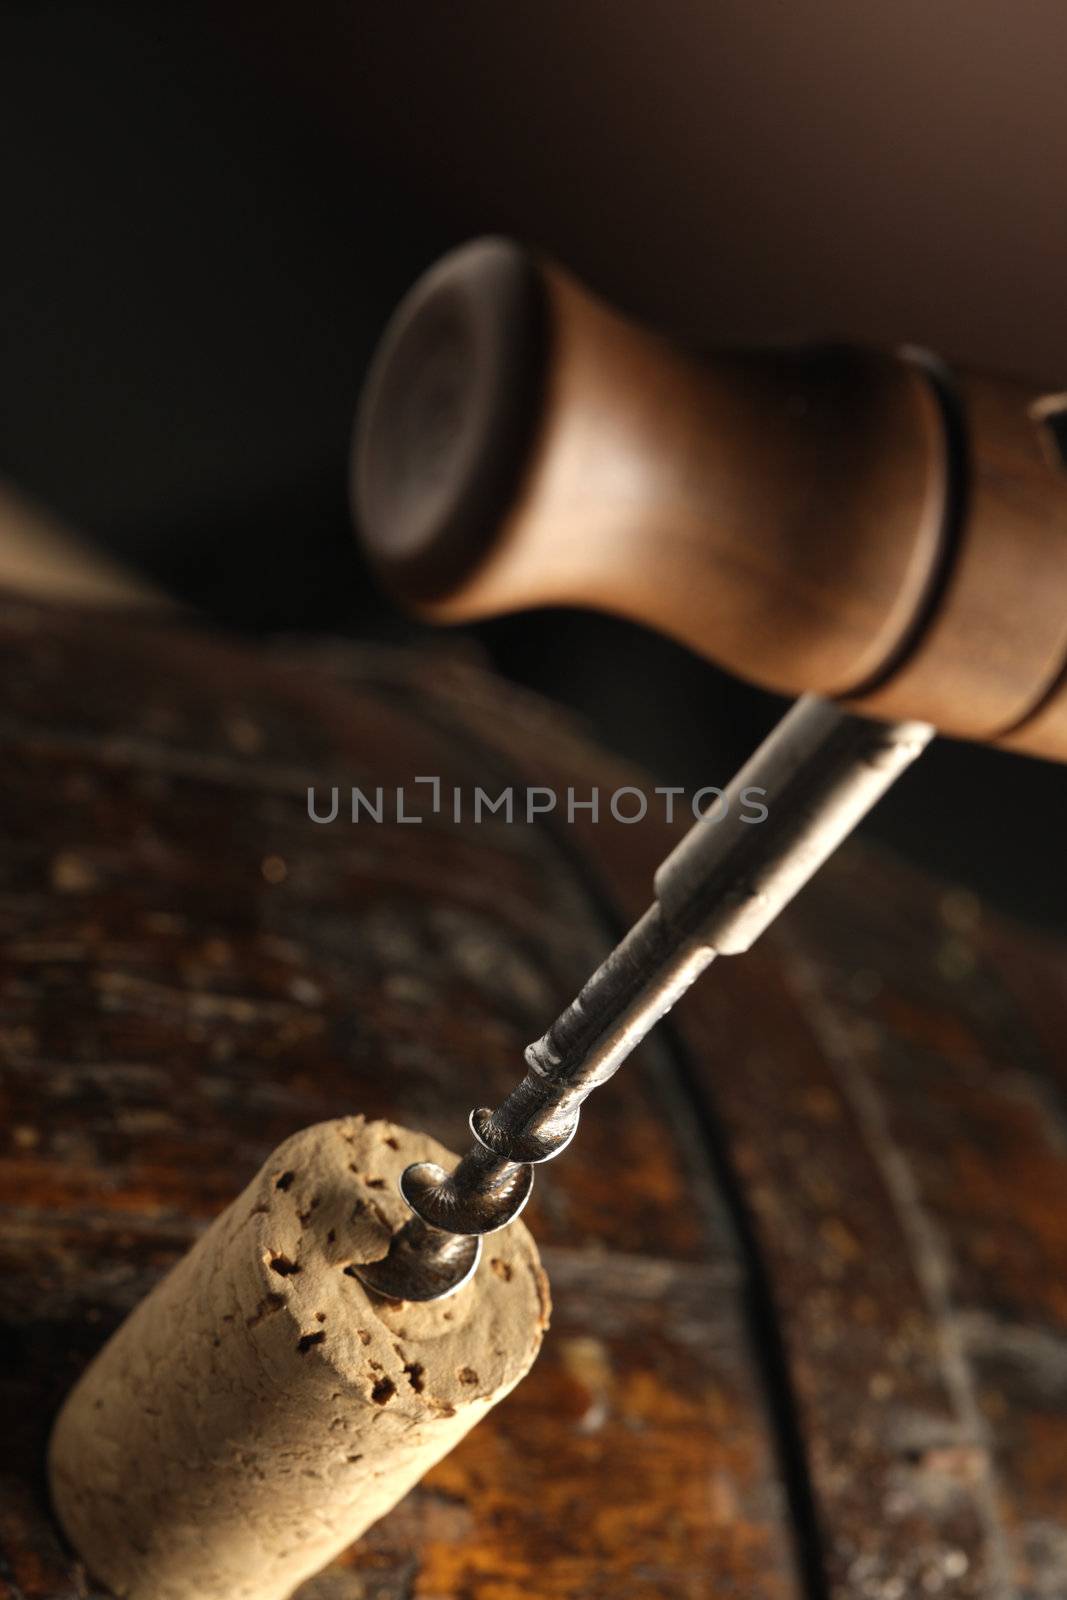 corkscrew and wooden barrel, close up